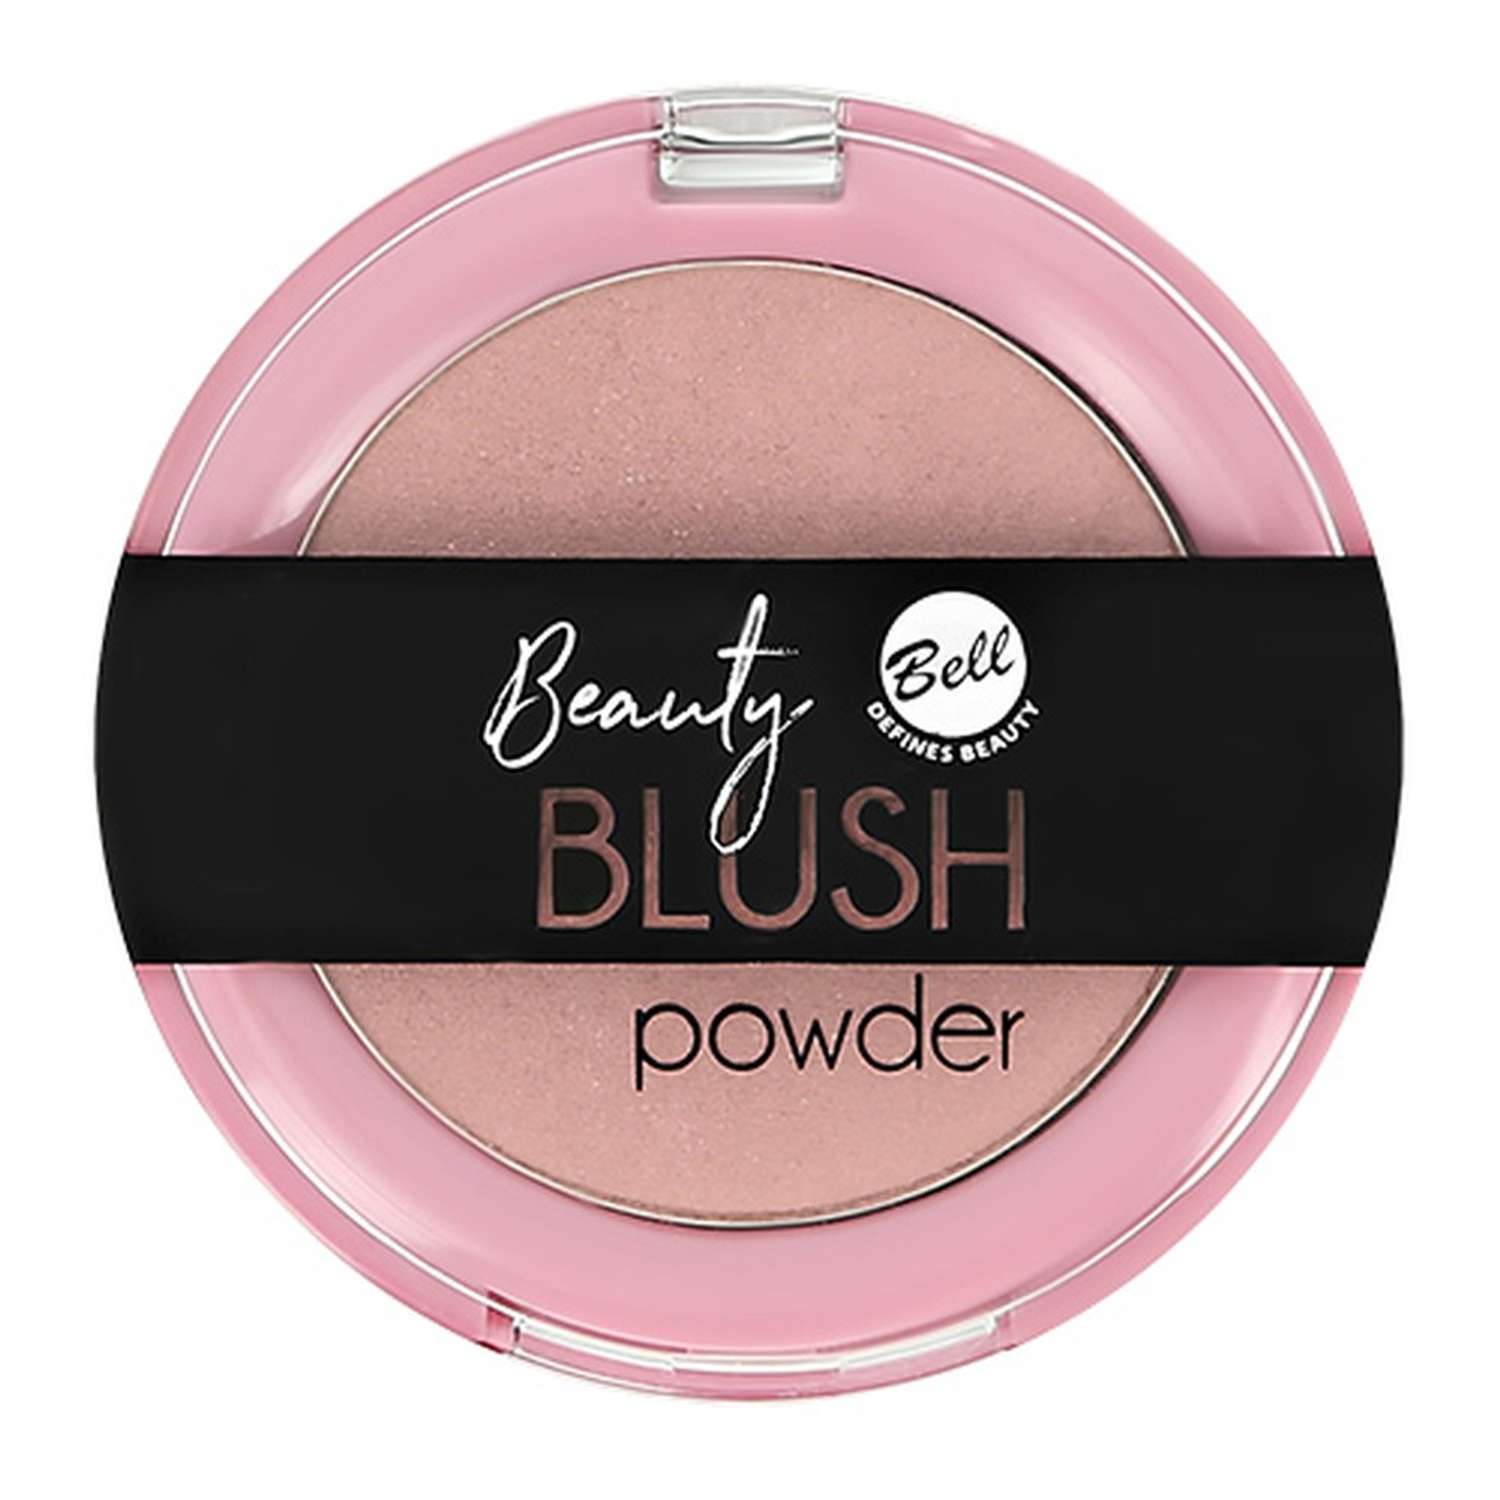 Румяна Bell компактные Beauty blush powder тон 01 - фото 3